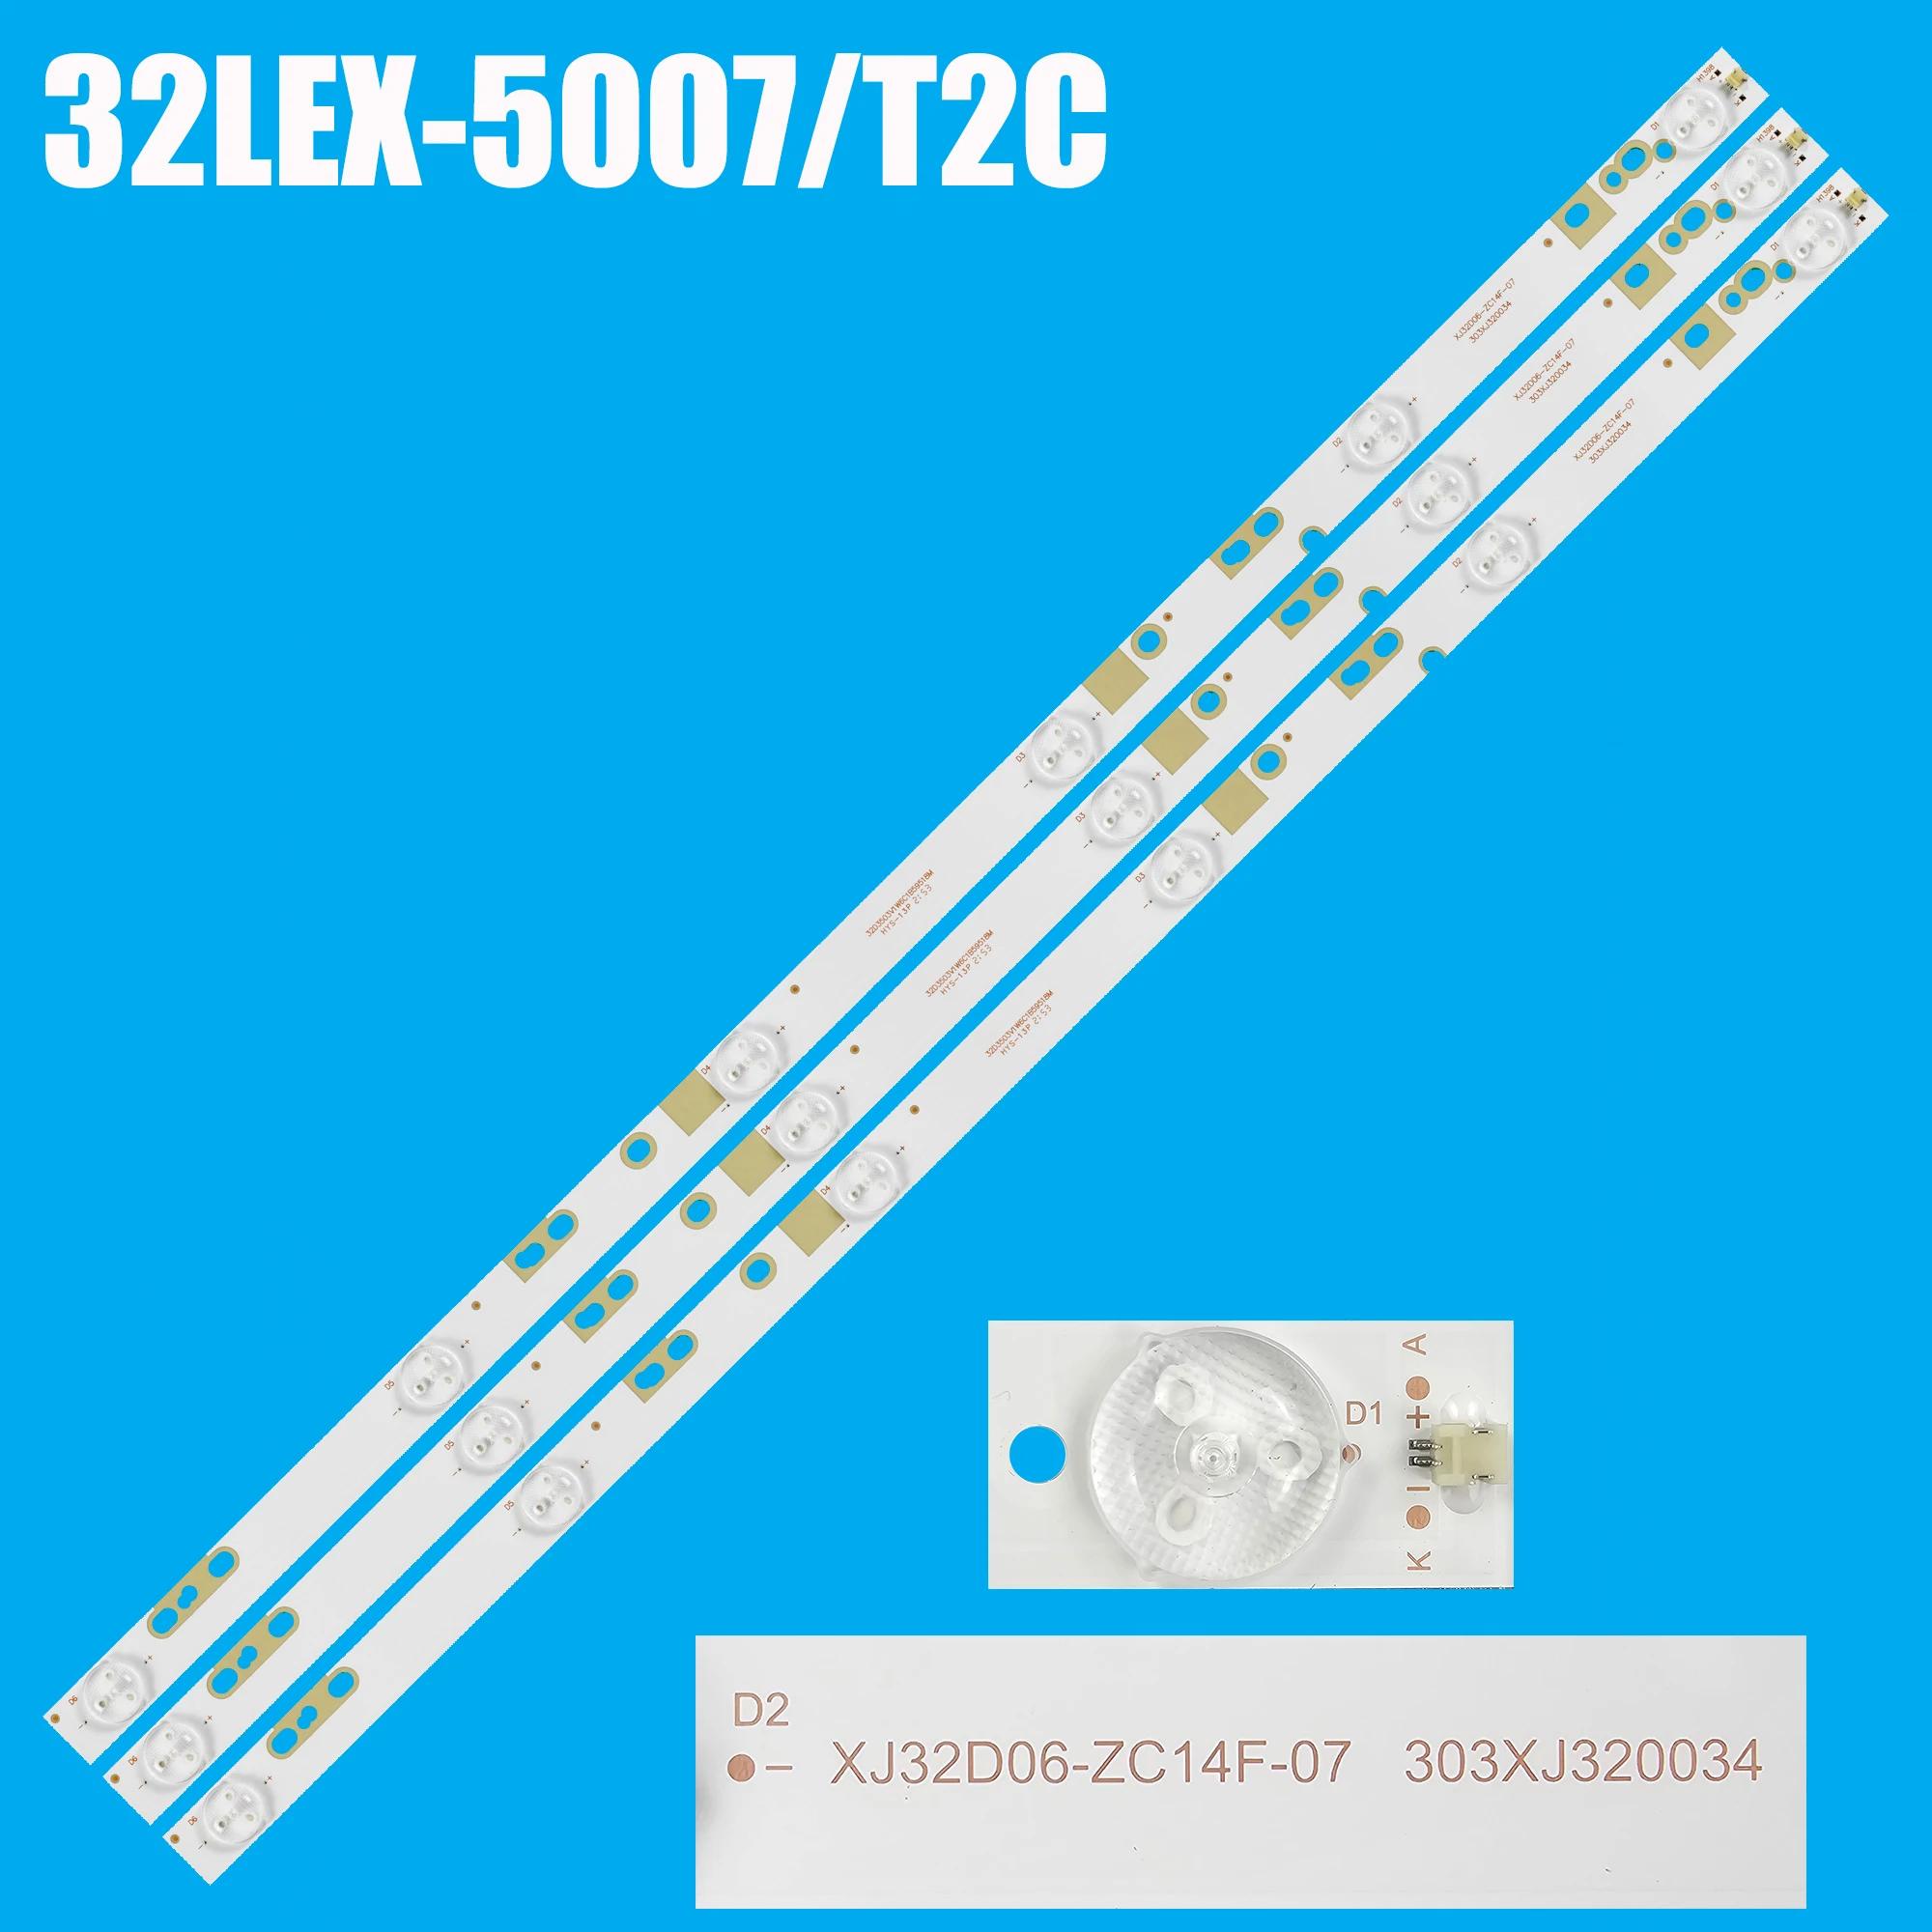 LED Ʈ, XJ320M06 XJ32D06-ZC14F-07 303XJ320034 SHYS32D06-ZC14F-01 BBK 32LEX-5007/T2C 32LEM-1031/TS2C 32LEX-5037/T2C